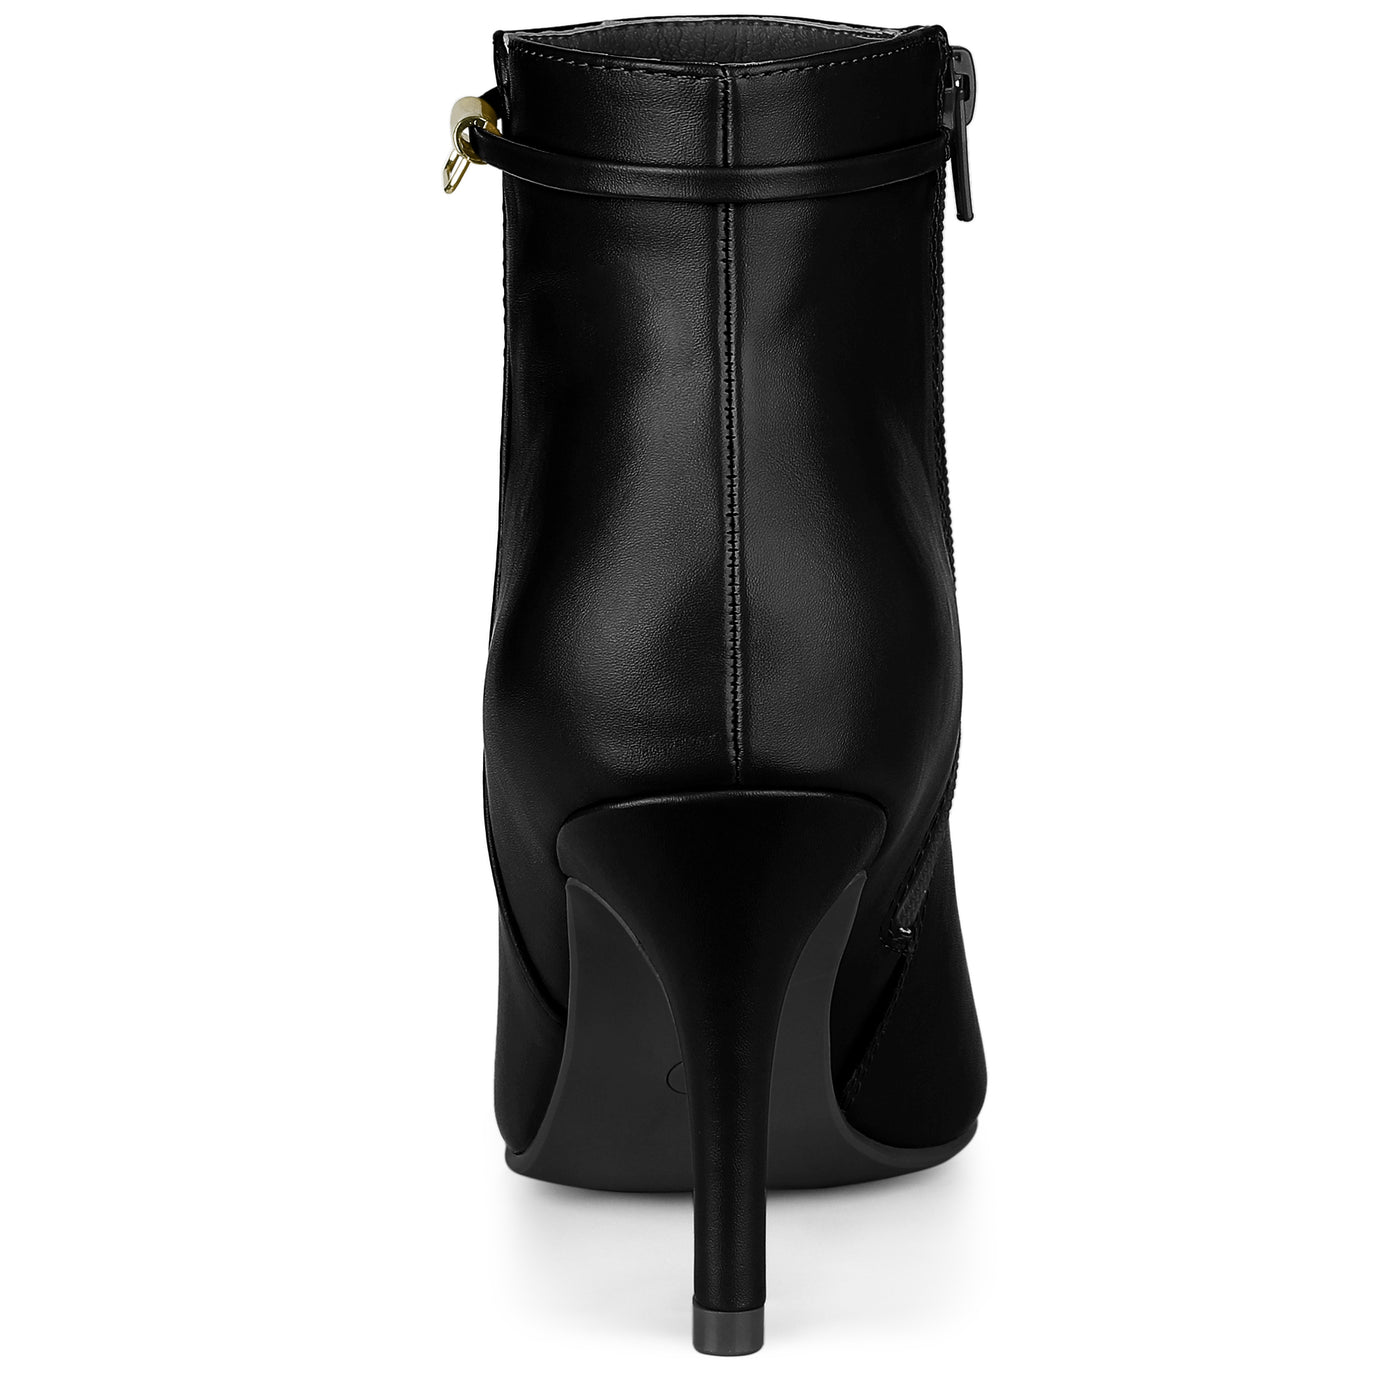 Allegra K Stiletto Heel Pointed Toe Side Zipper Faux Leather Ankle Boots